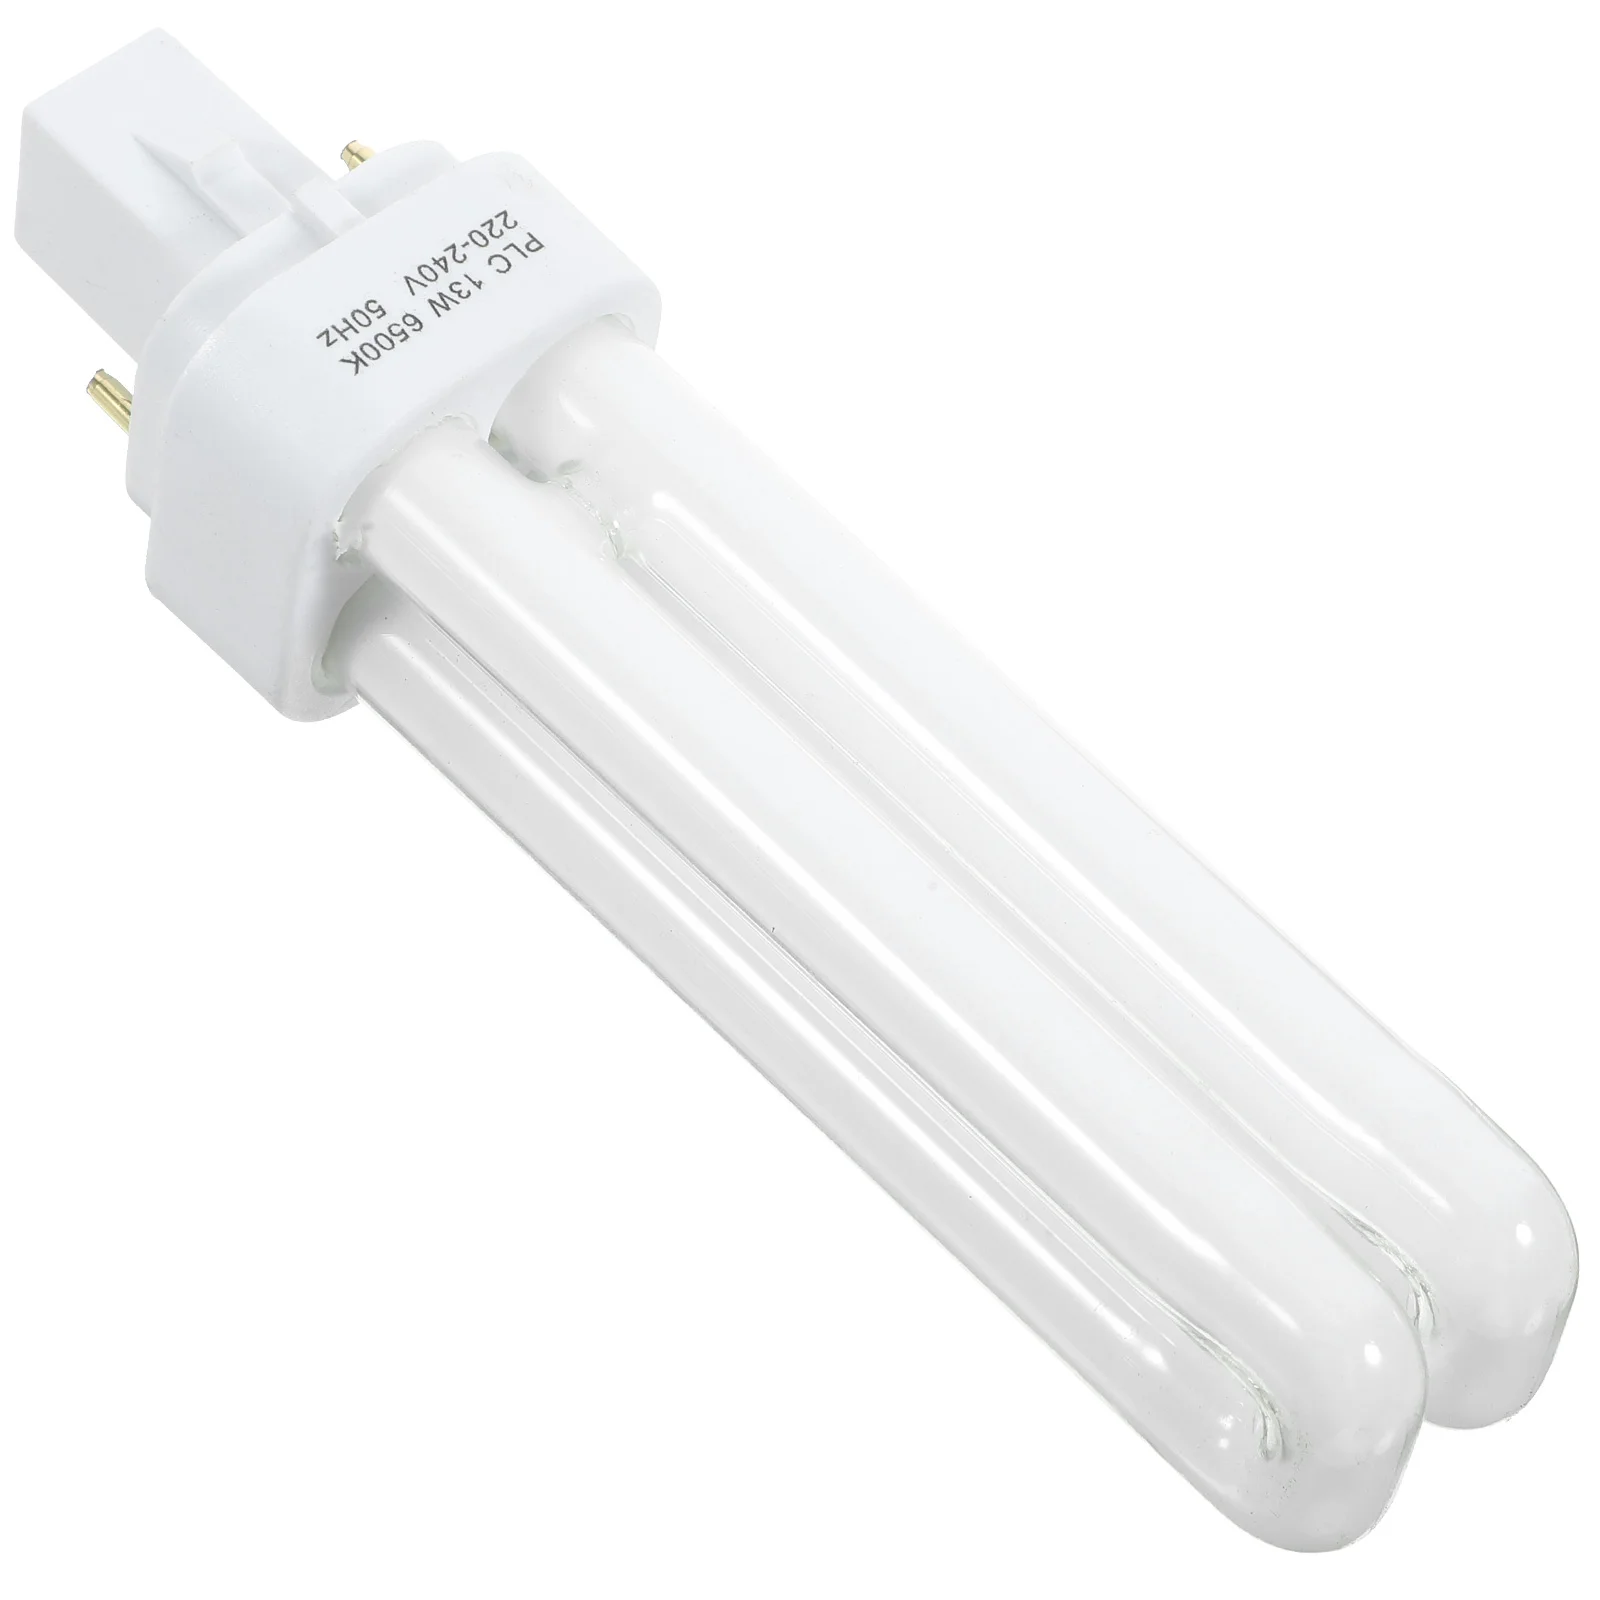 

4 Pcs Energy Saving Lamp Double Tube Bulb Fluorescent Light Bulbs Compact 13W 2 Prong Plug LED